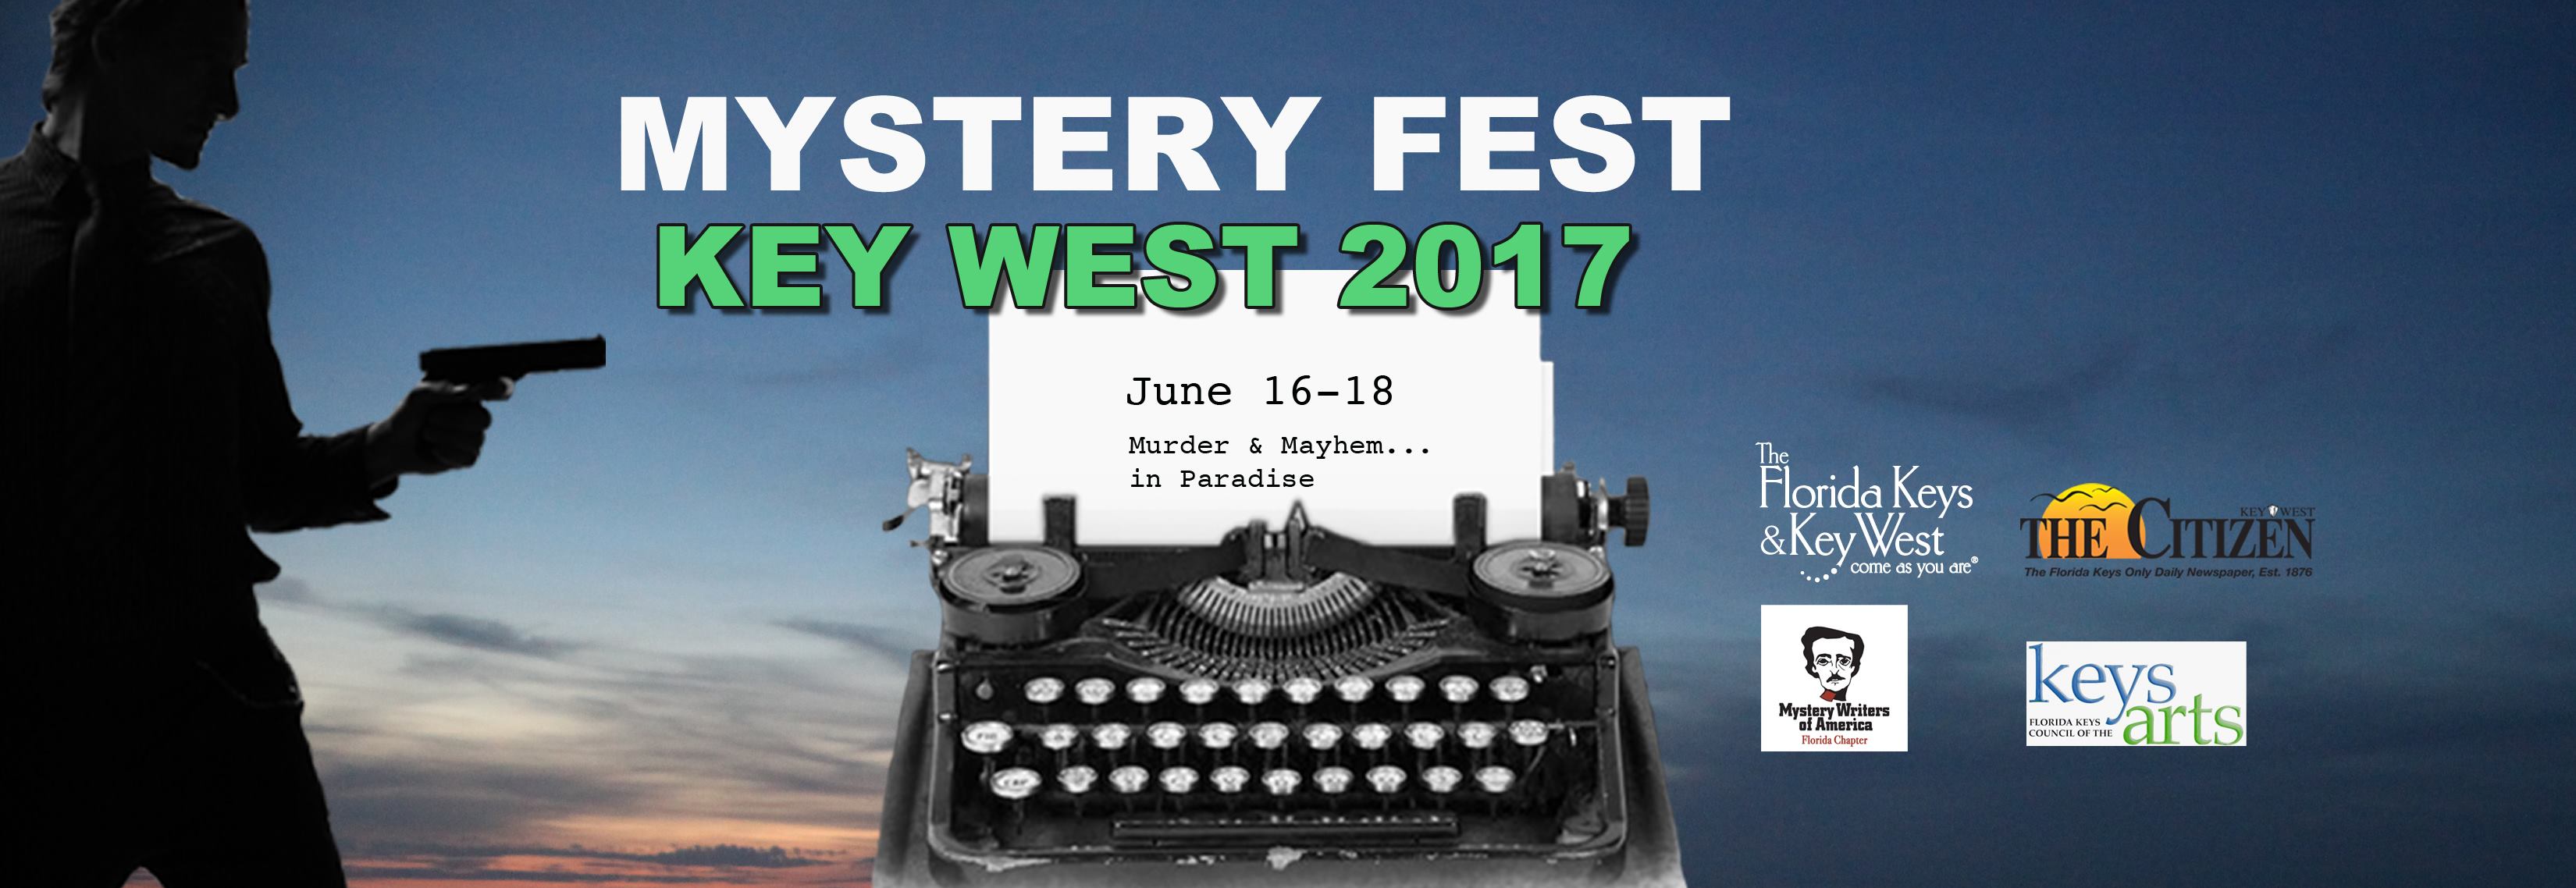 Key West Mystery Fest 2017